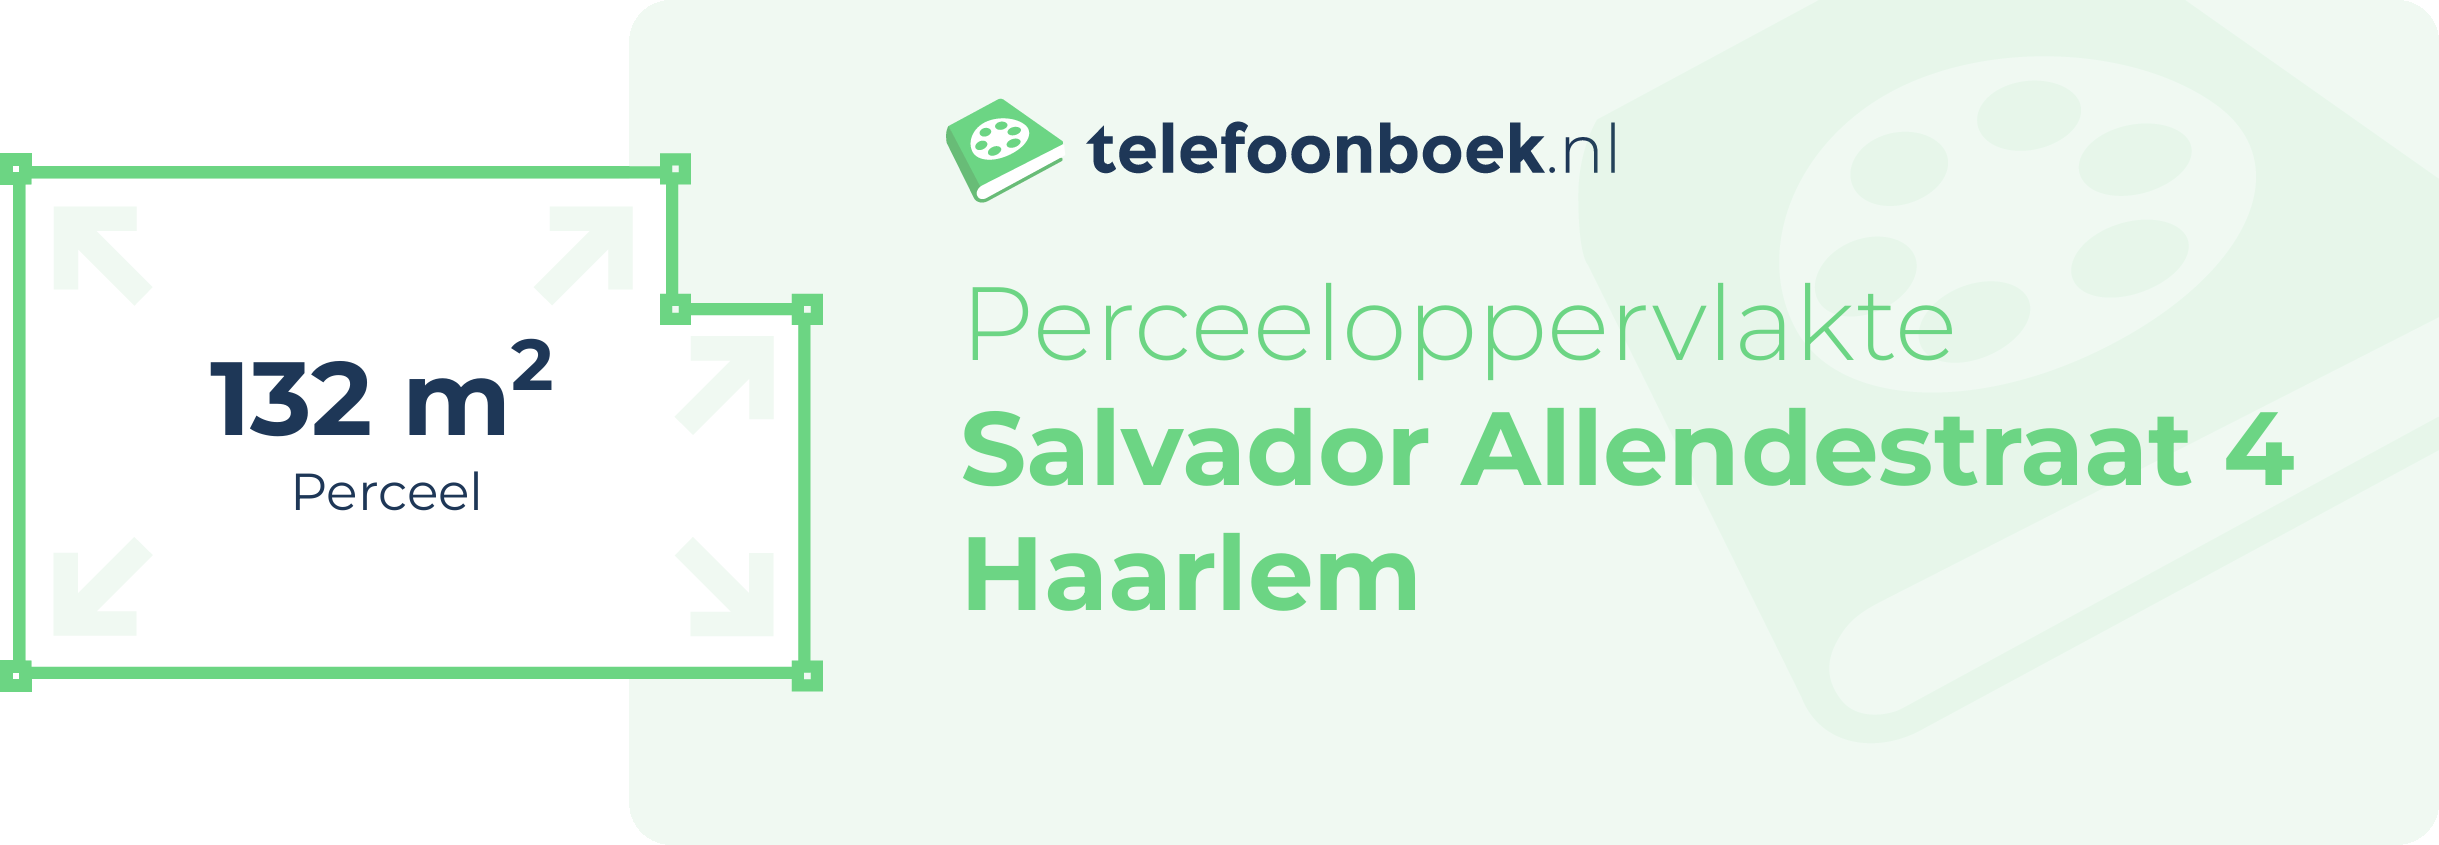 Perceeloppervlakte Salvador Allendestraat 4 Haarlem